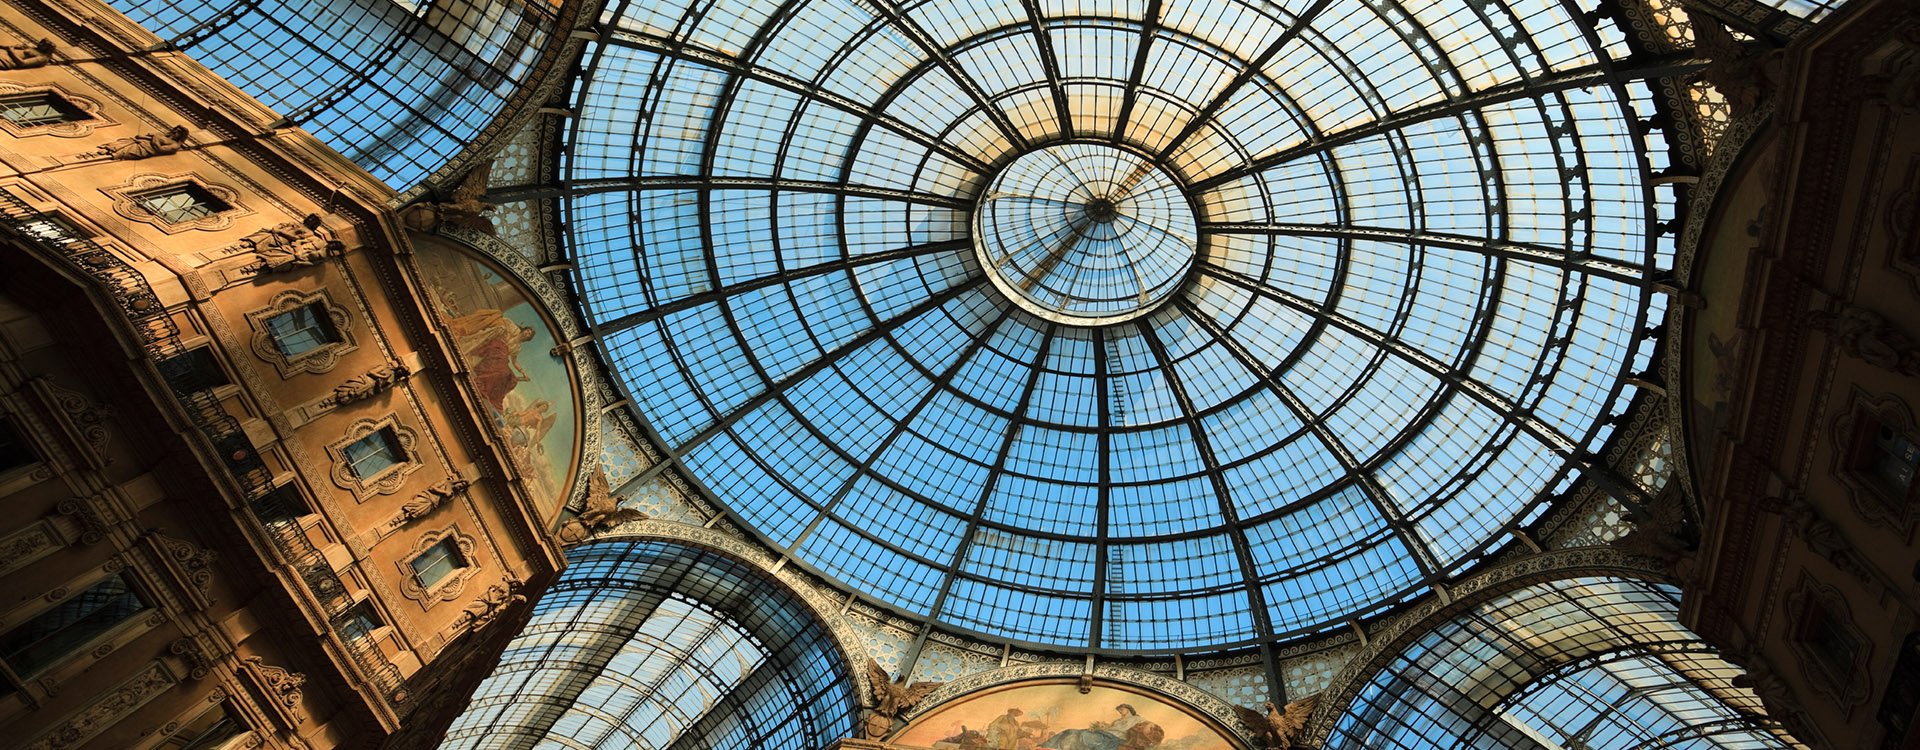 Italy_Milan_Dome in Galleria Vittorio Emanuele II_iStock_000014870651_Large